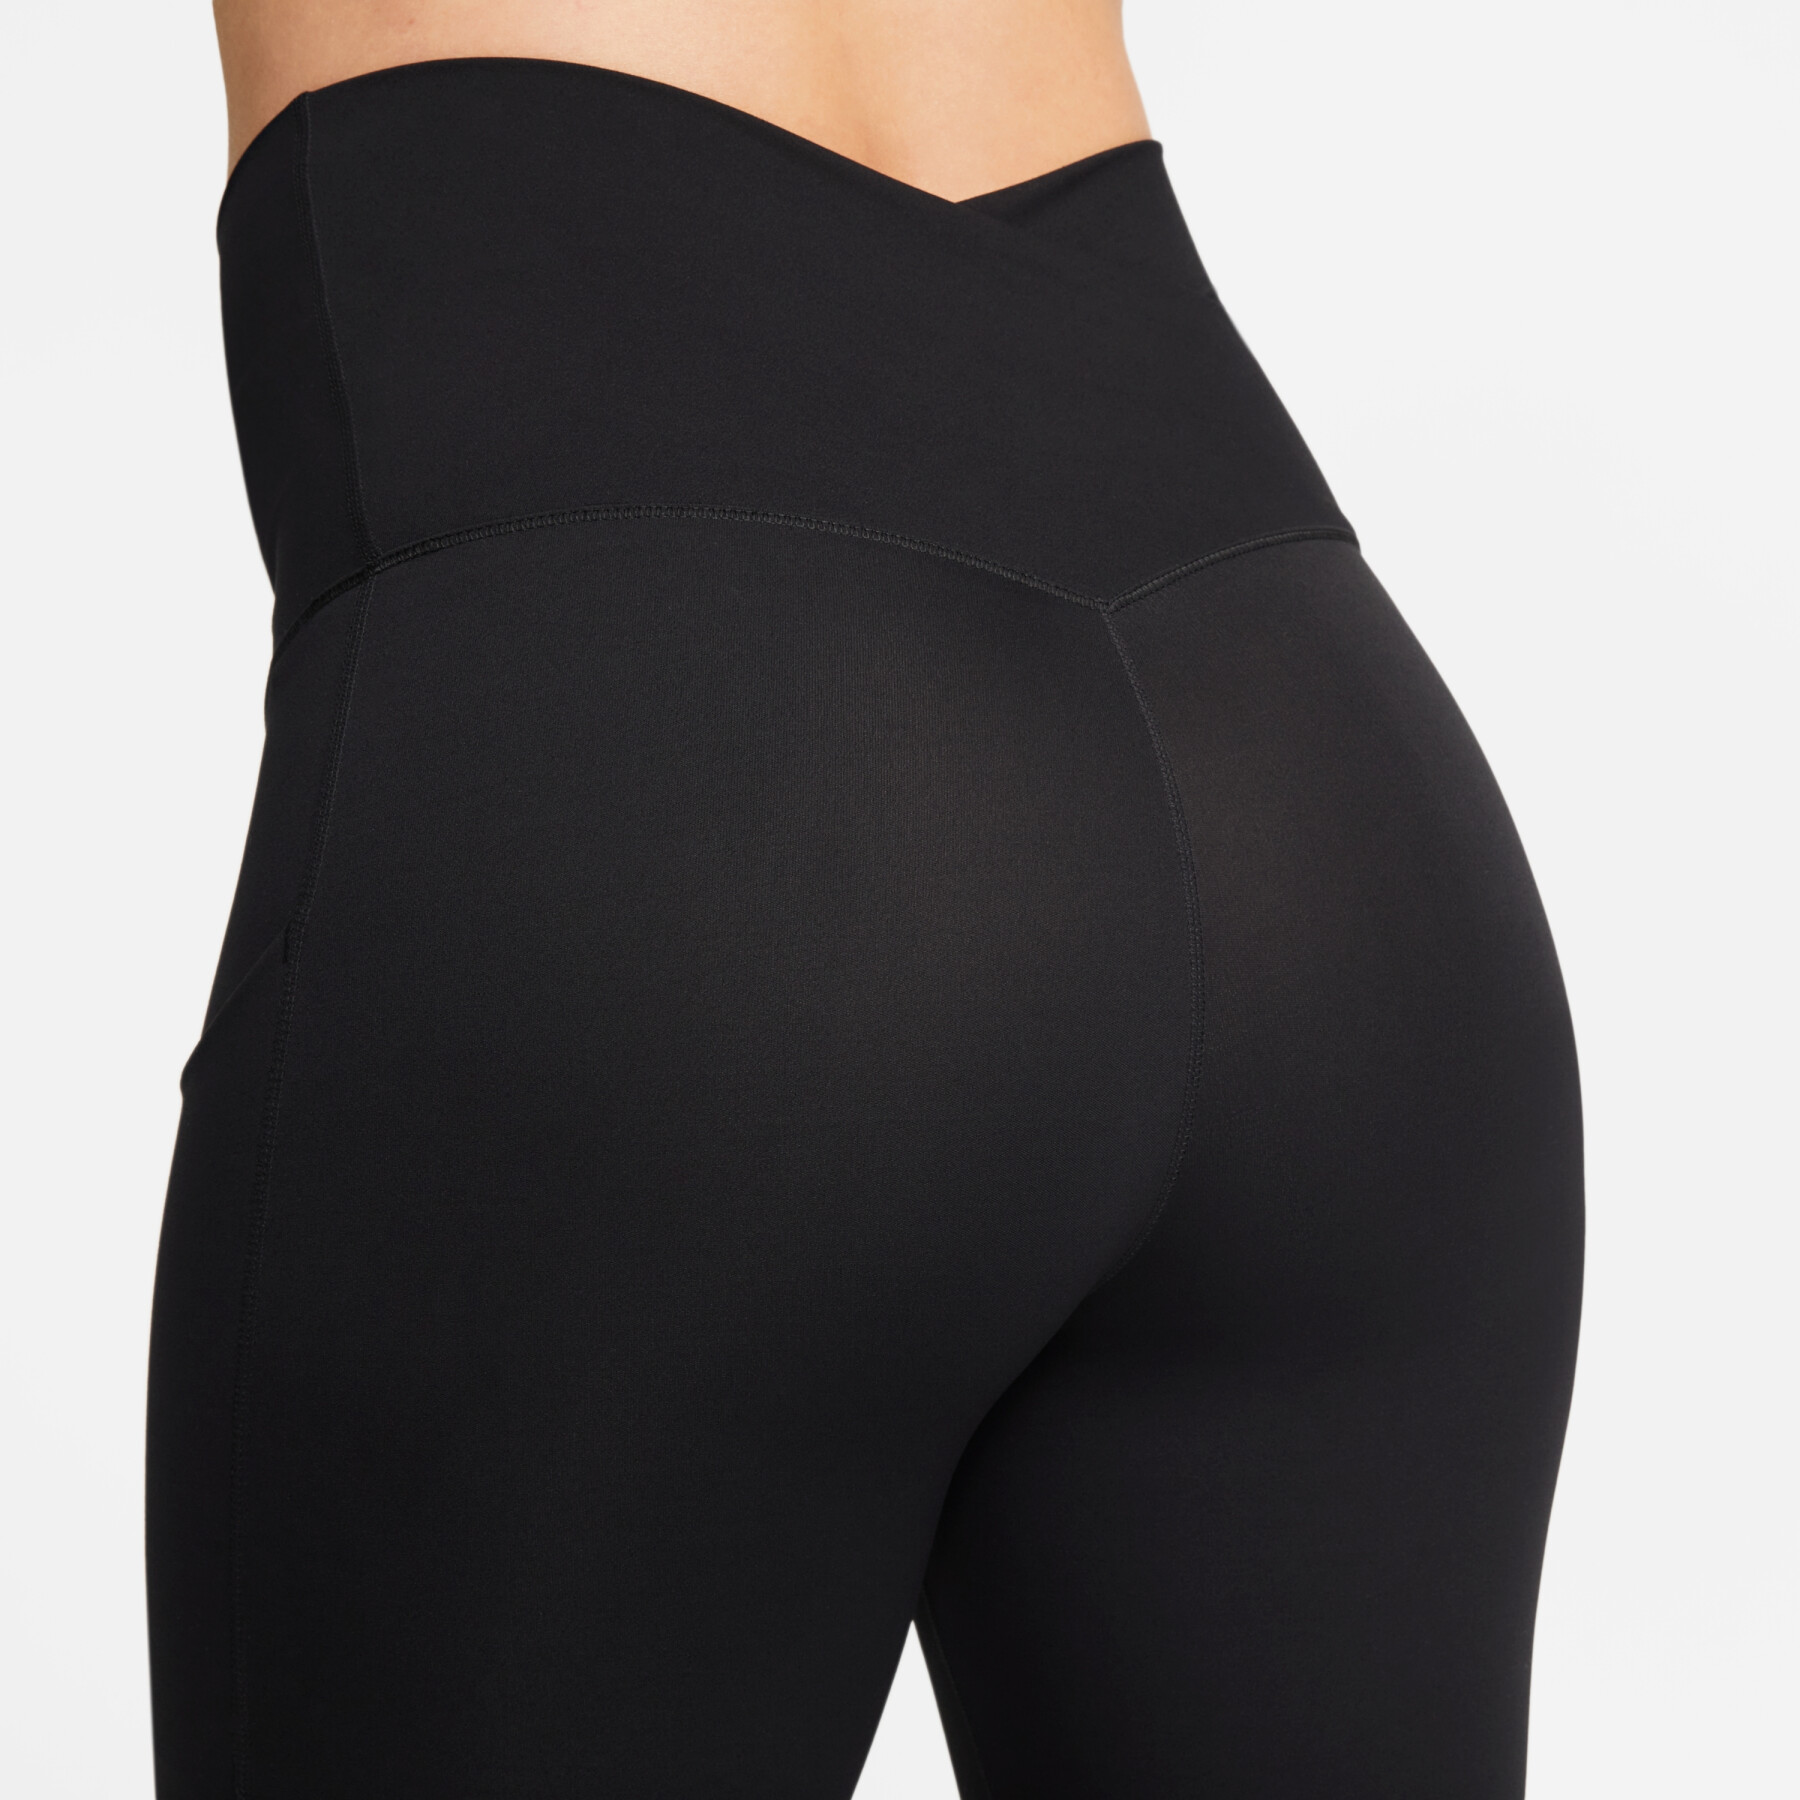 Women's 7/8 leggings Nike Zenvy